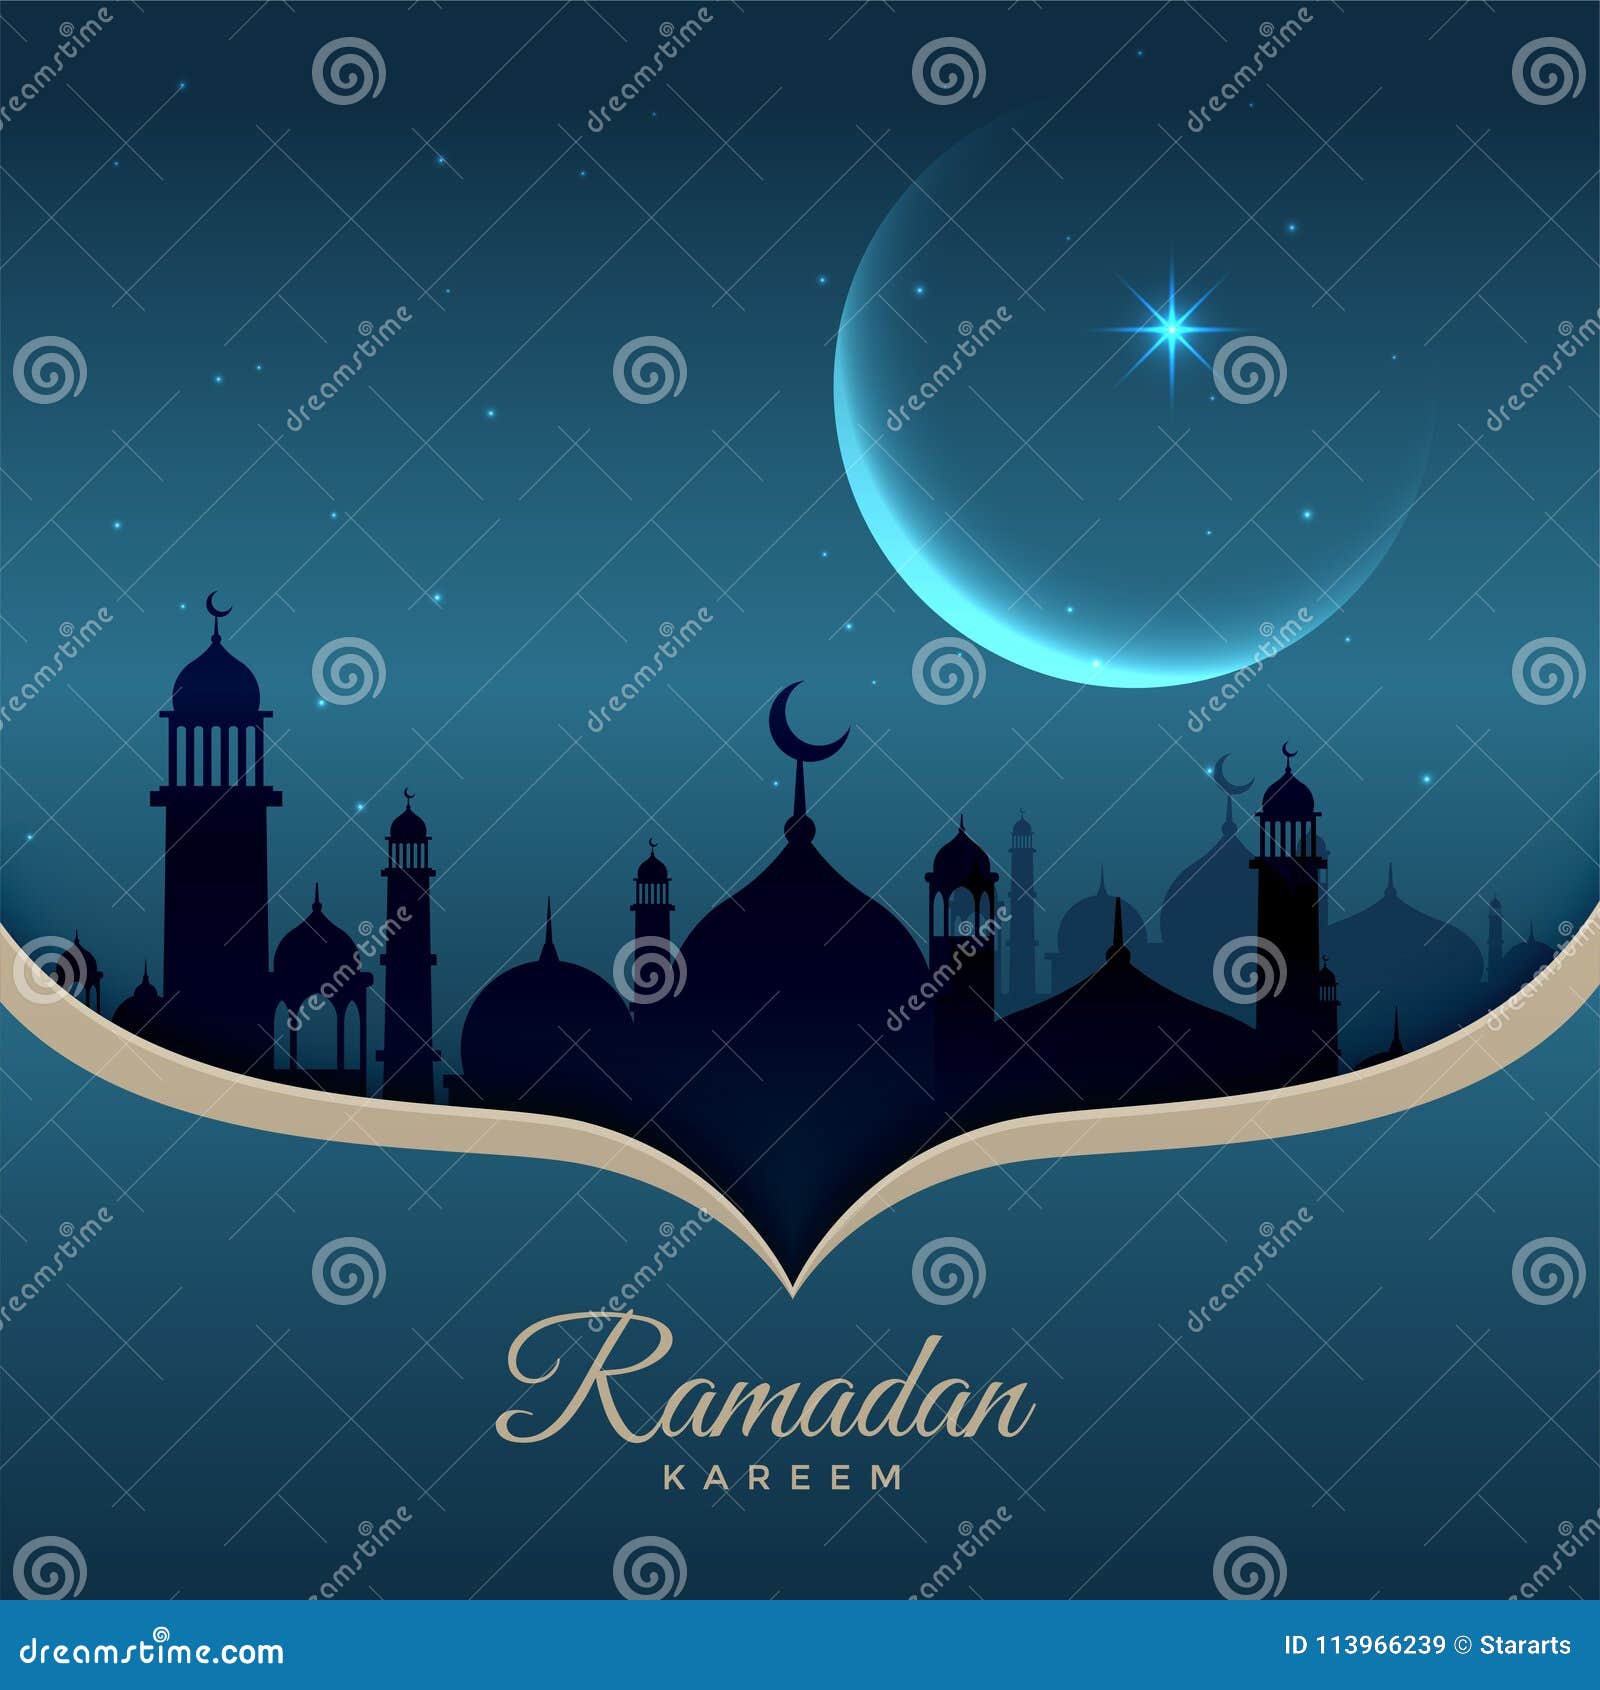 Beautiful Night Scene With Mosque Moon And Stars For Ramadan Kareem